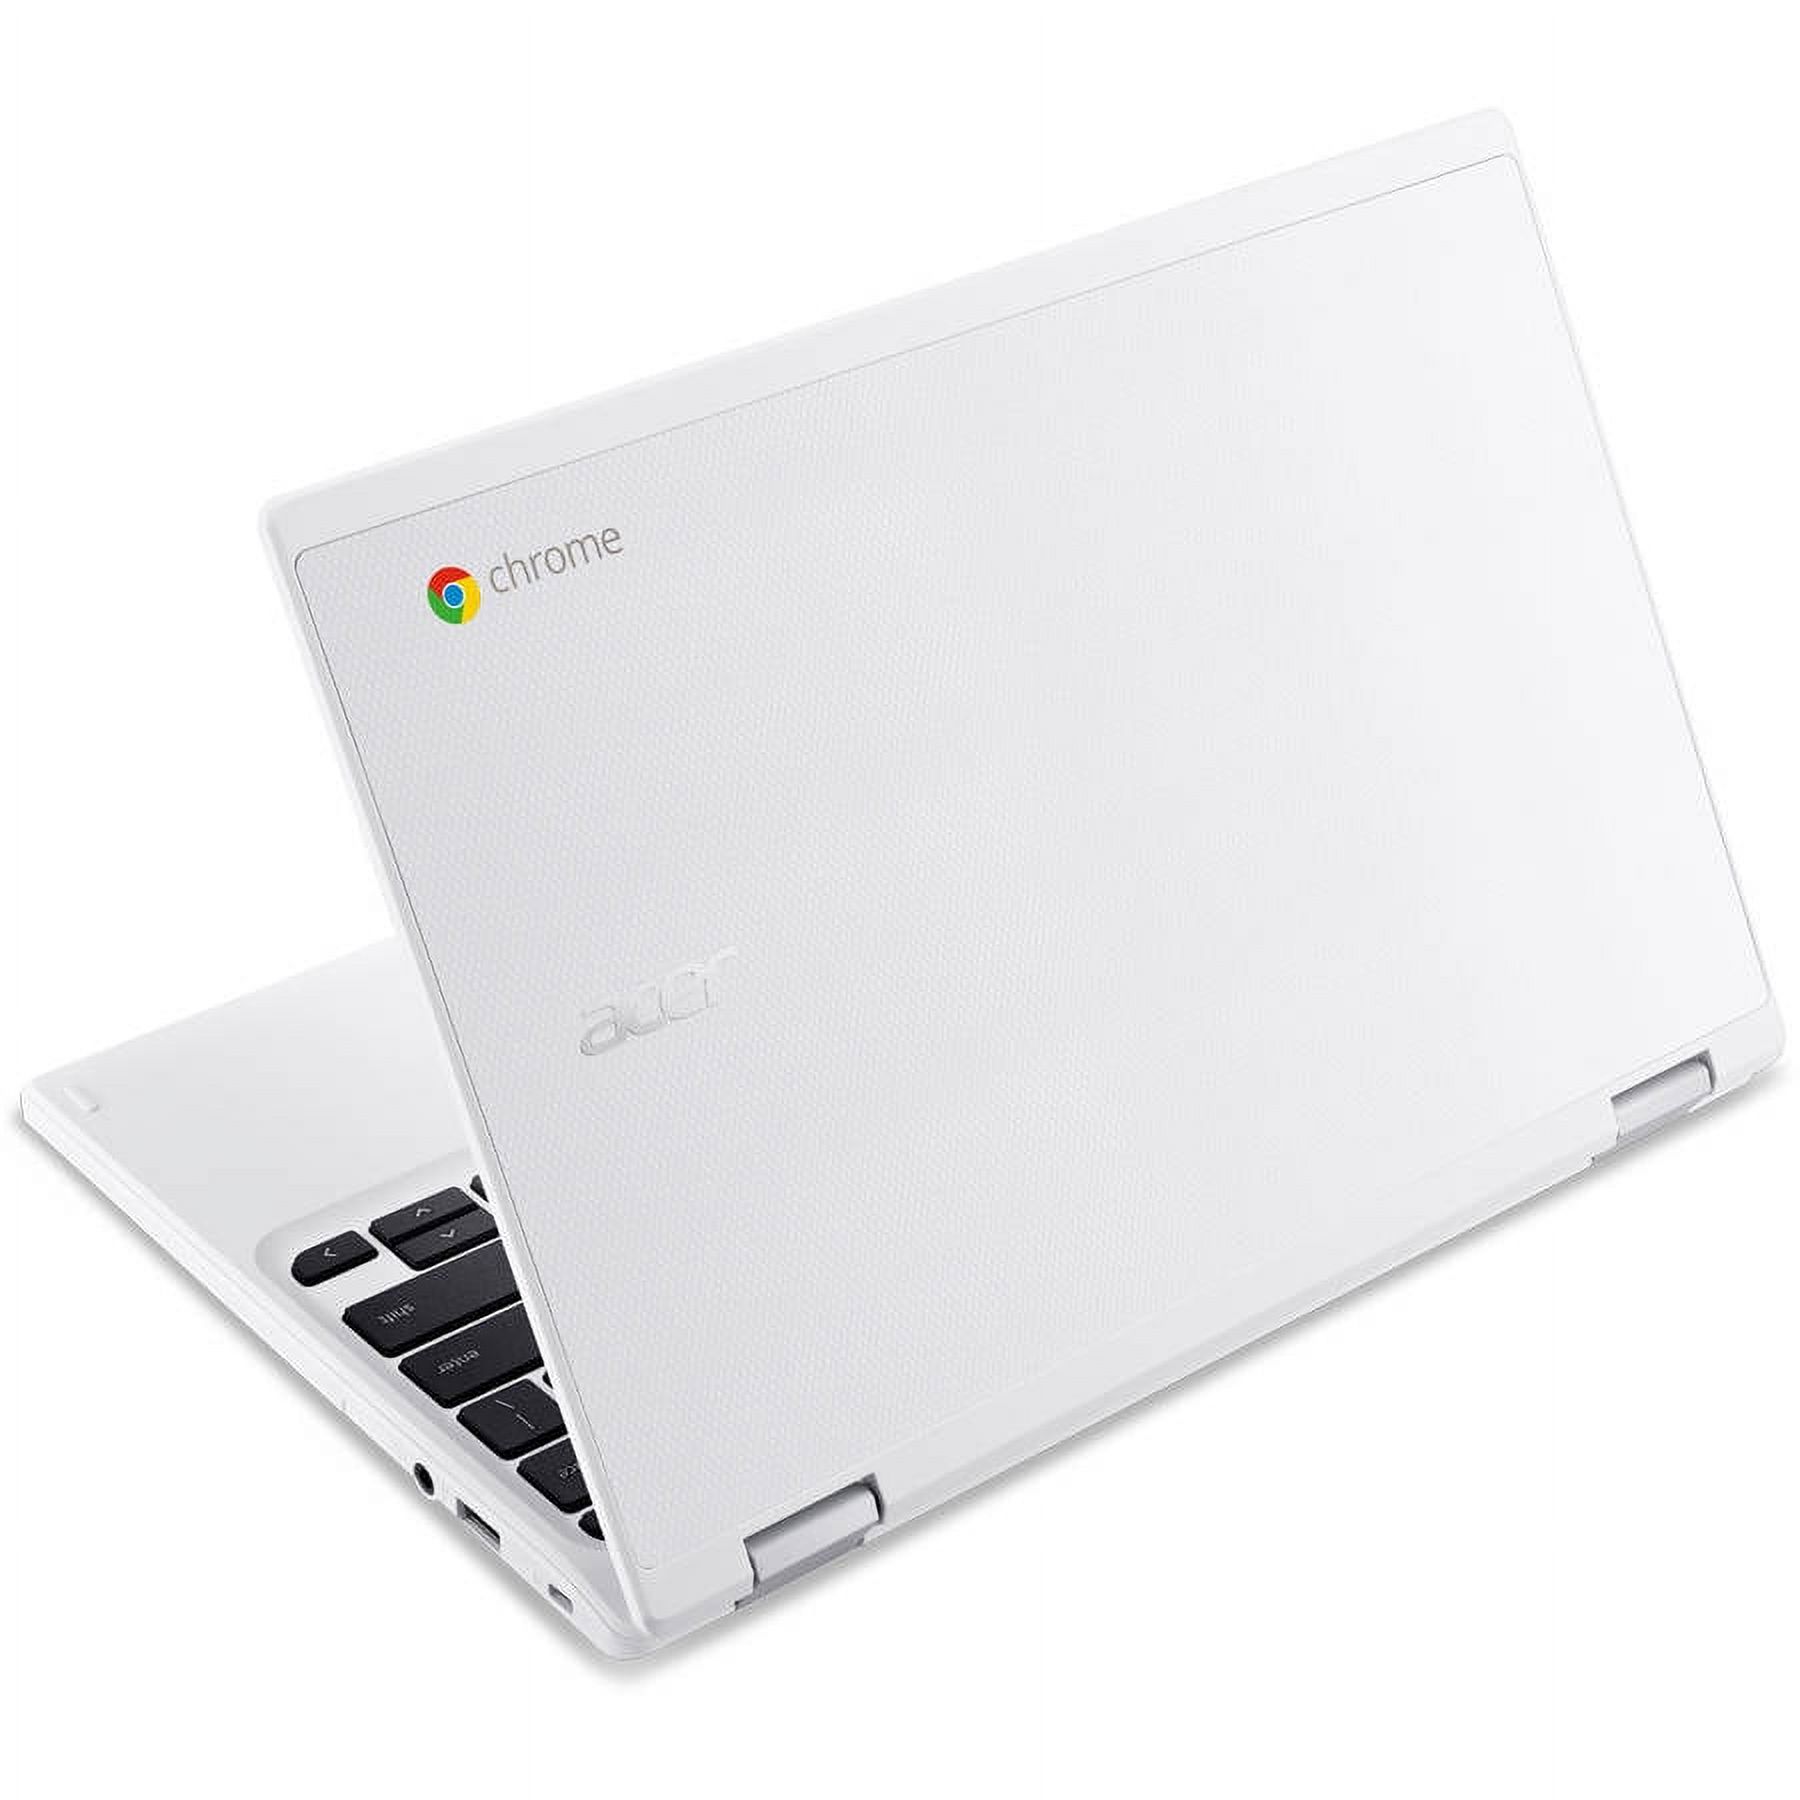 Acer Denim White 11.6" CB3-131-C3SZ Chromebook 11 PC with Intel Celeron N2840 Dual-Core Processor, 2GB Memory, 16GB Flash Storage and Google Chrome - image 5 of 8